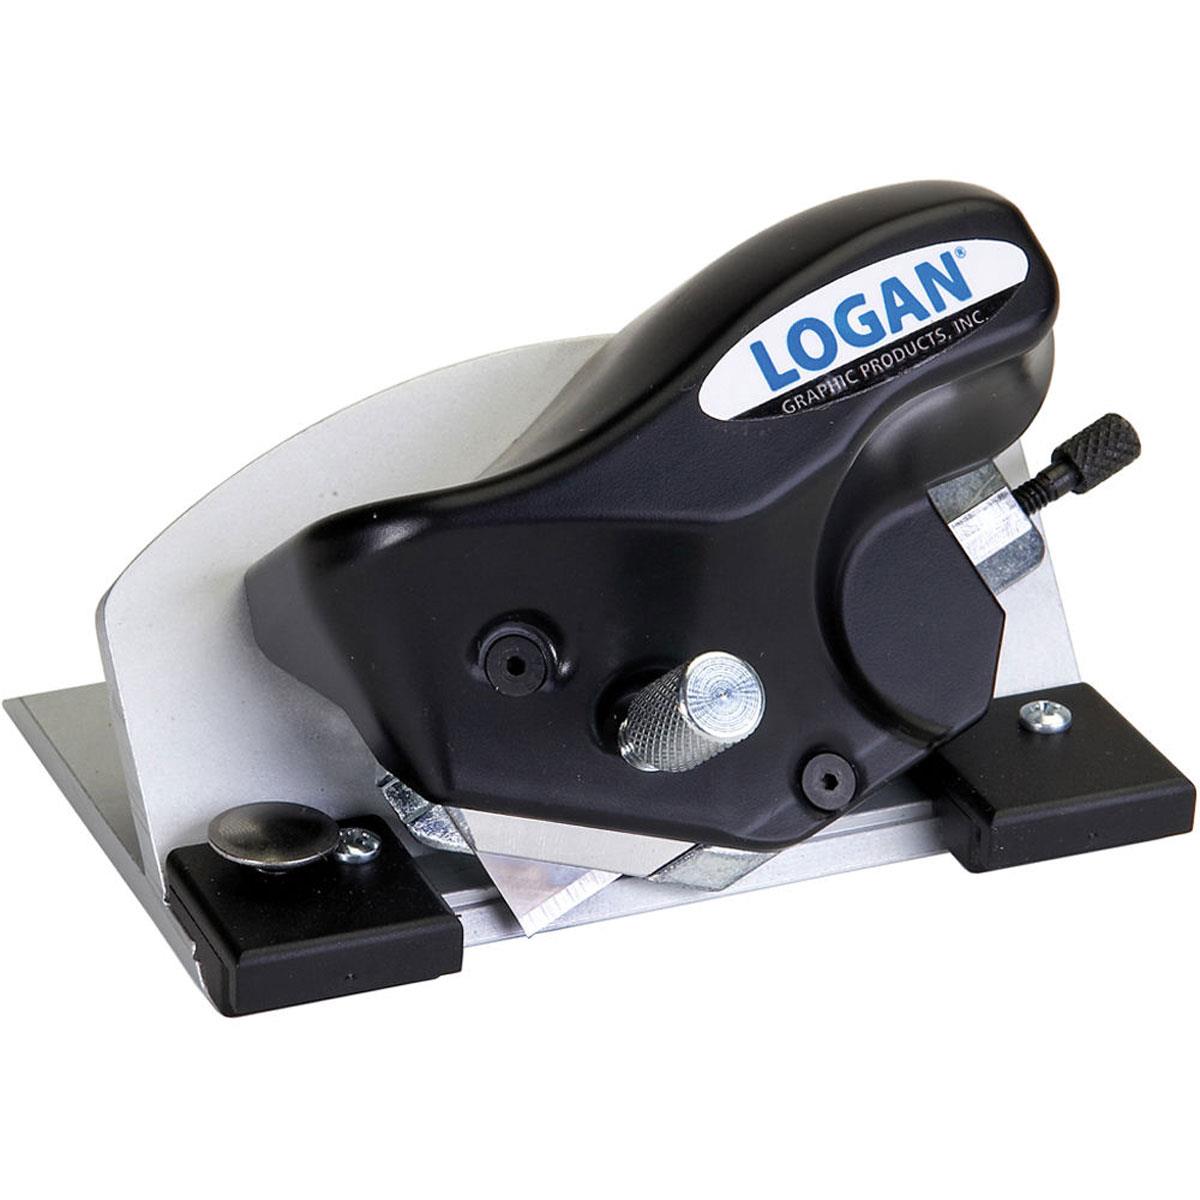 Image of Logan Graphics 8-Ply Handheld Mat Cutter